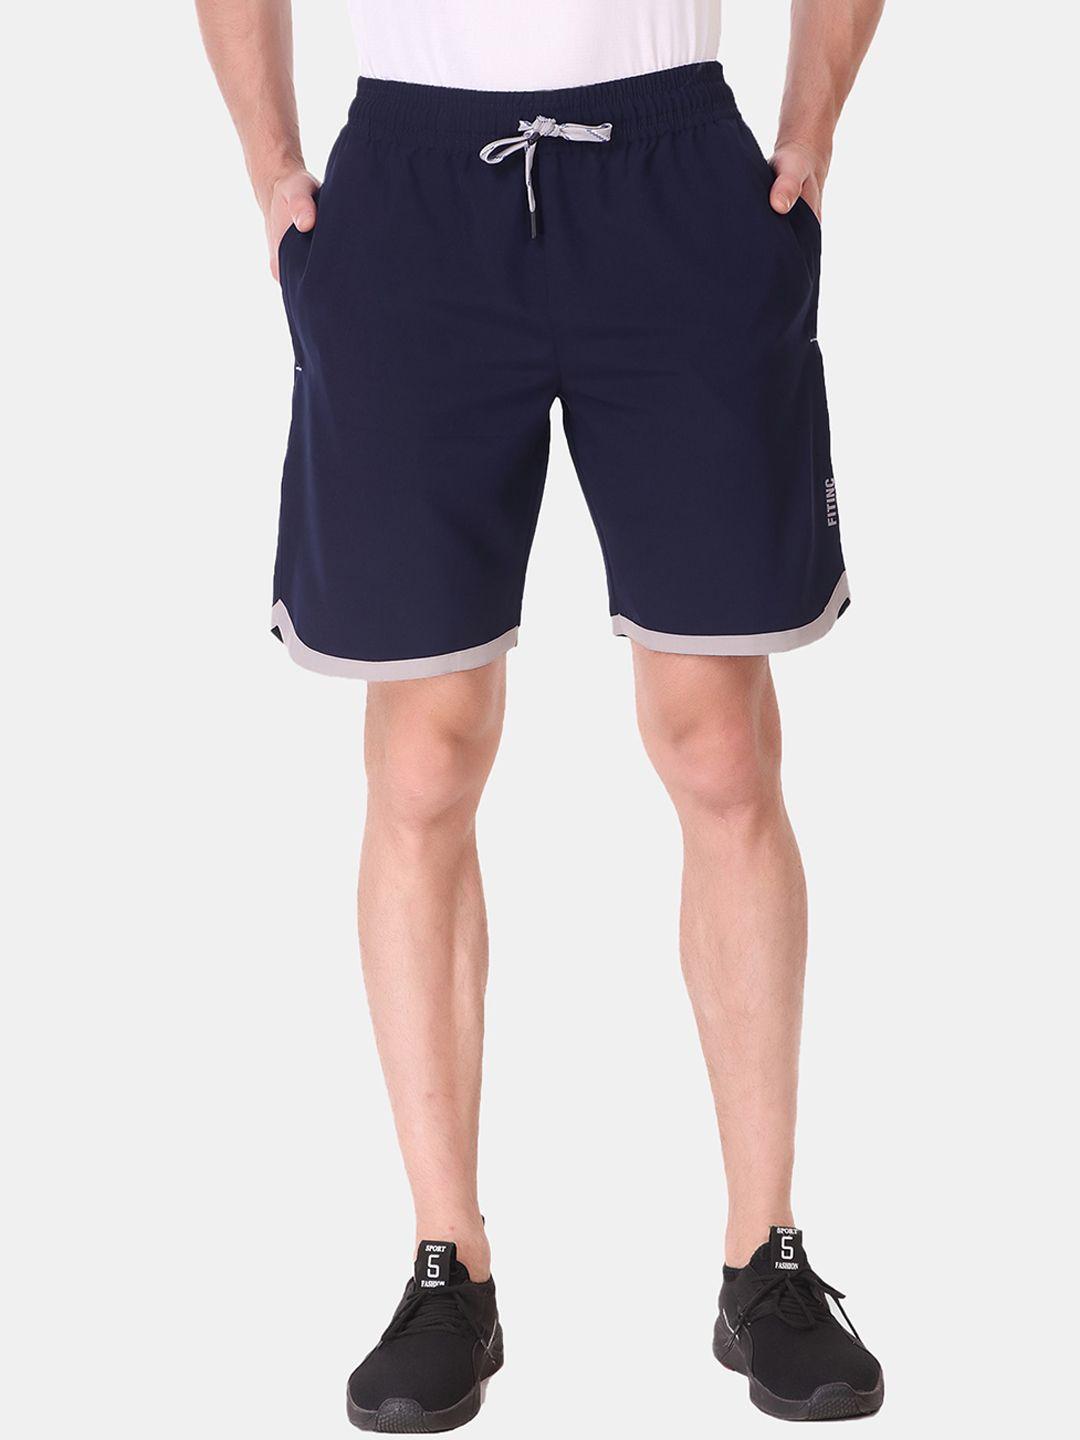 fitinc men navy blue running sports shorts